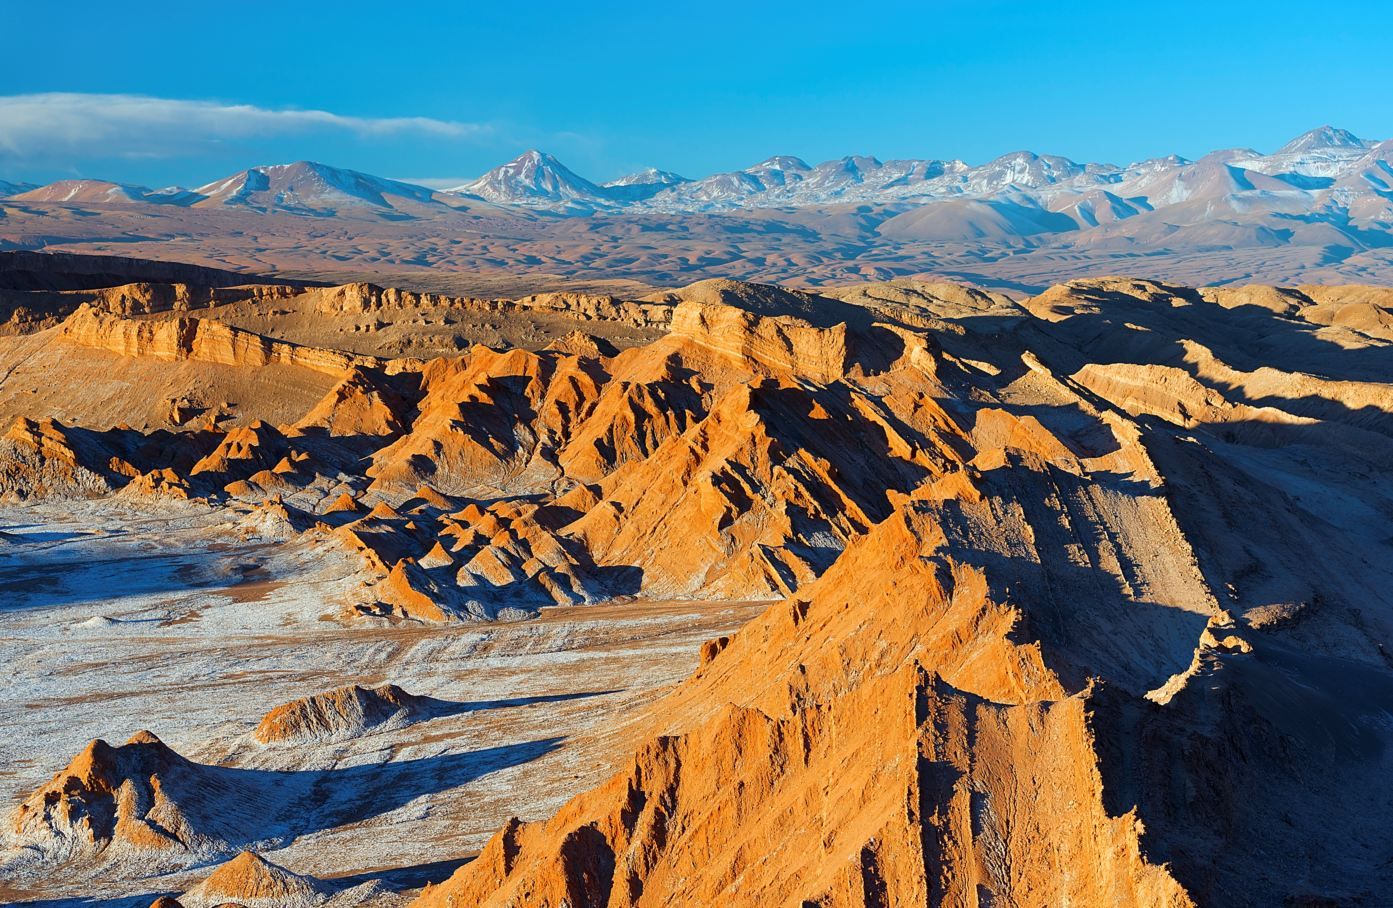 La vallée de la Lune, désert d'Atacama - Chili ©iStock